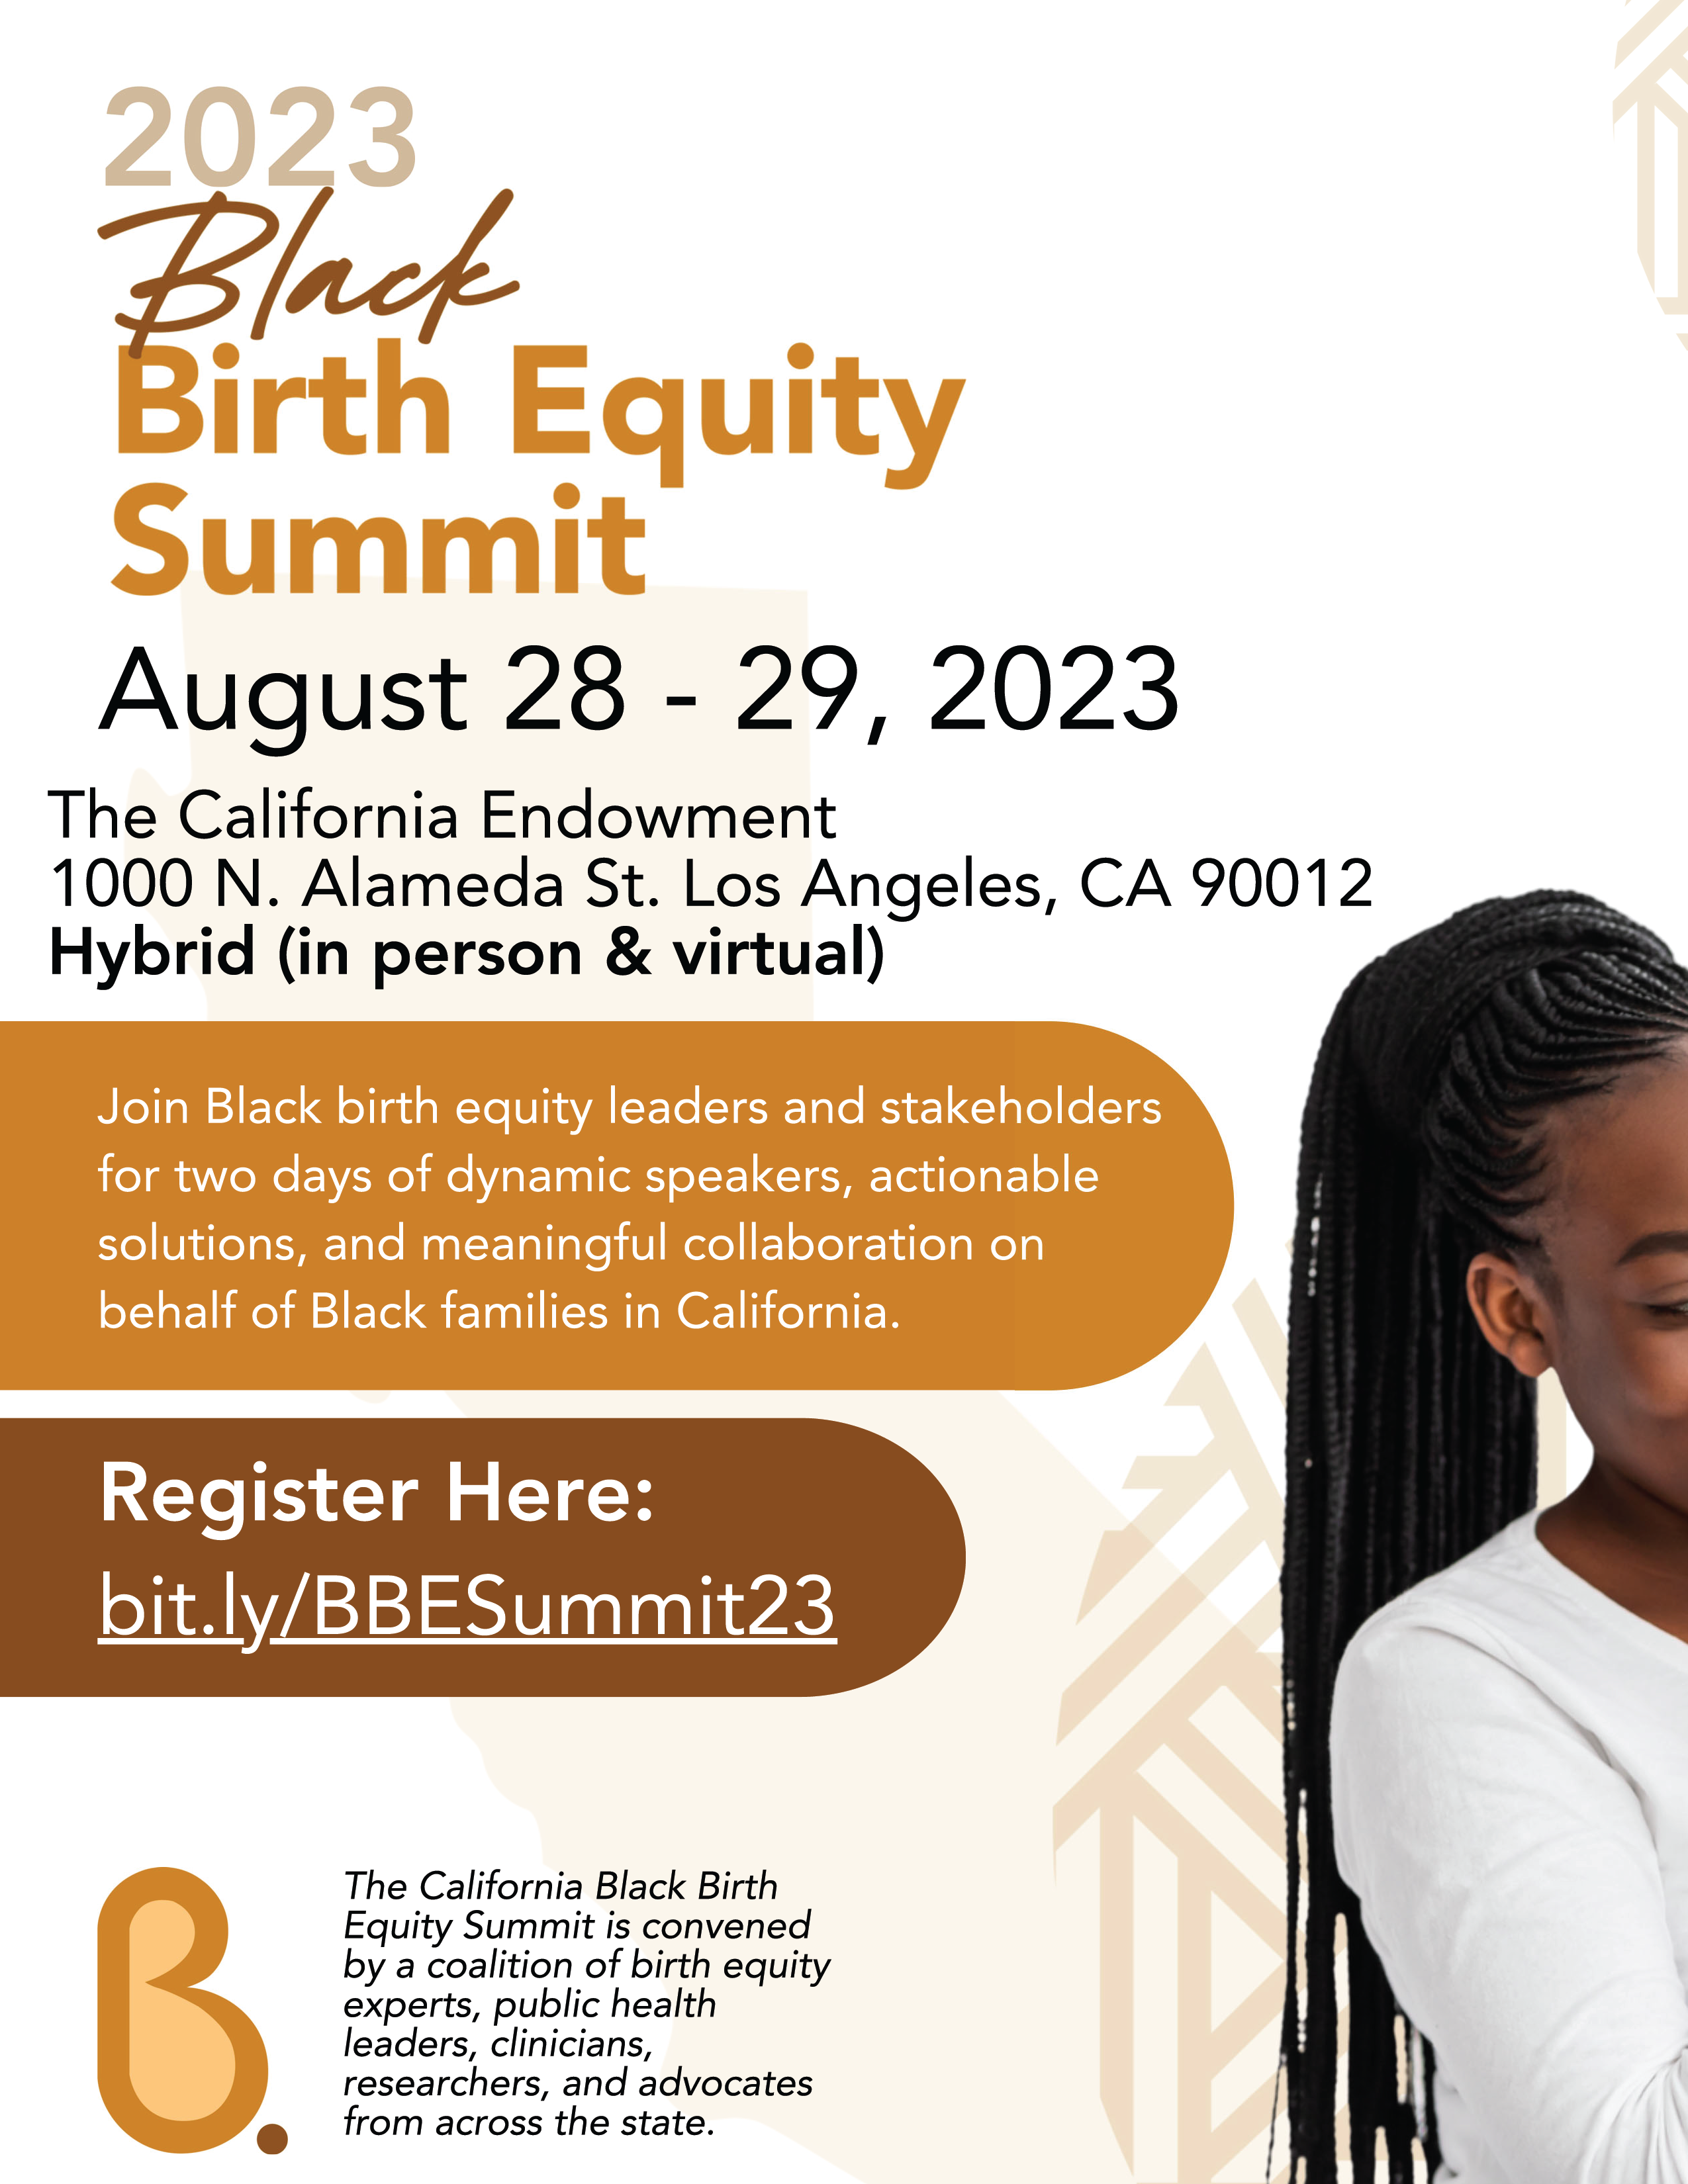 Black Birth Equity Summit